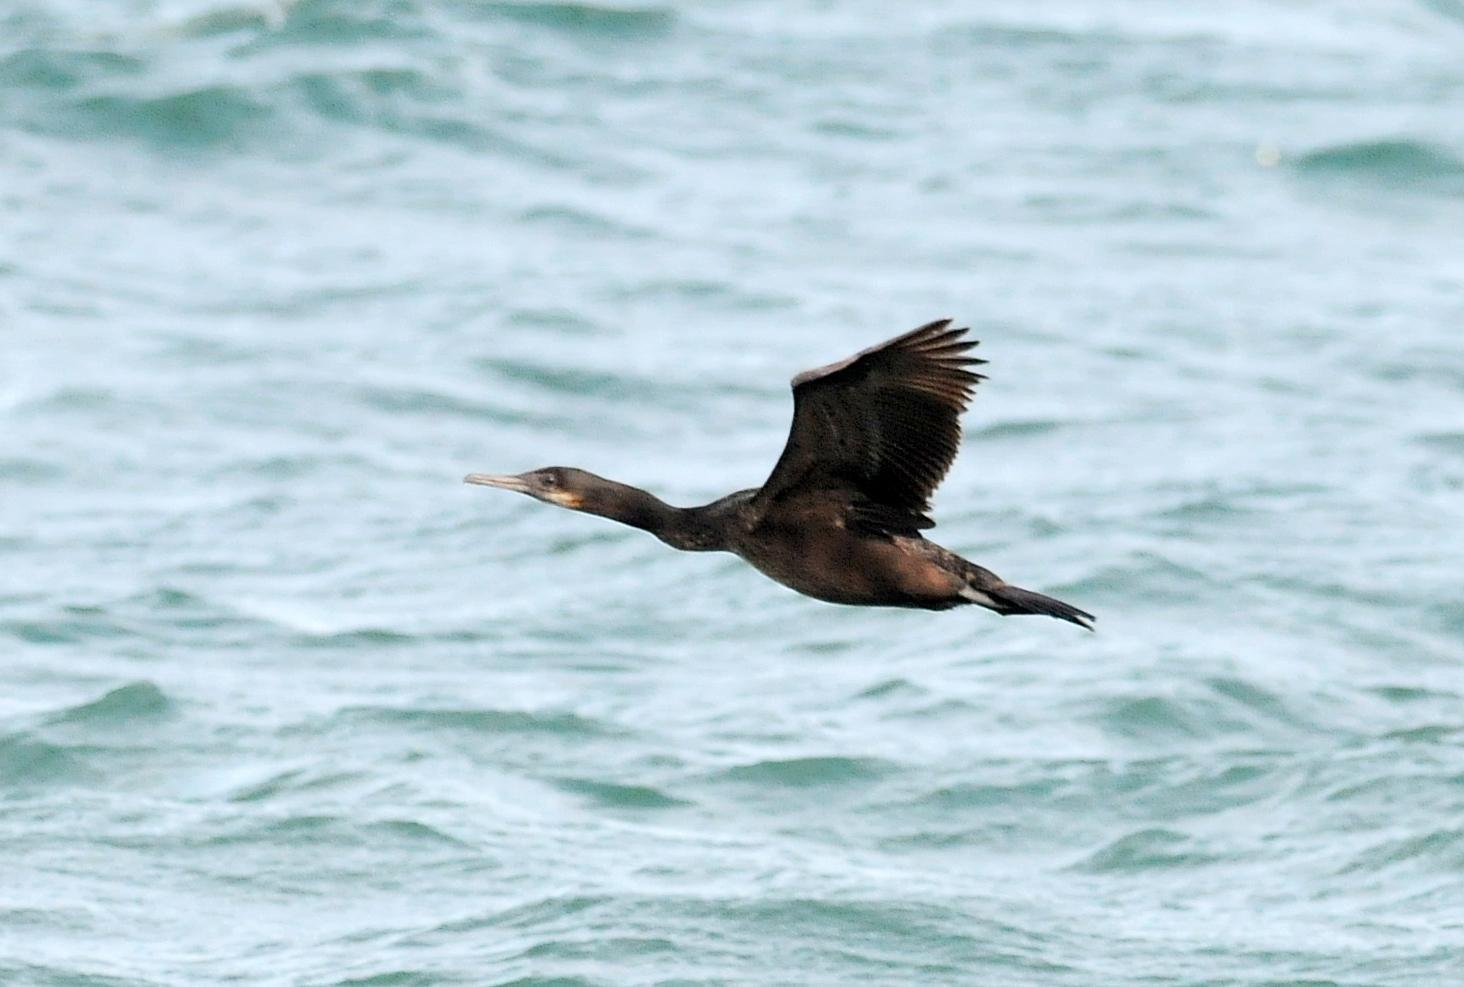 Brandt's Cormorant Photo by Steven Mlodinow